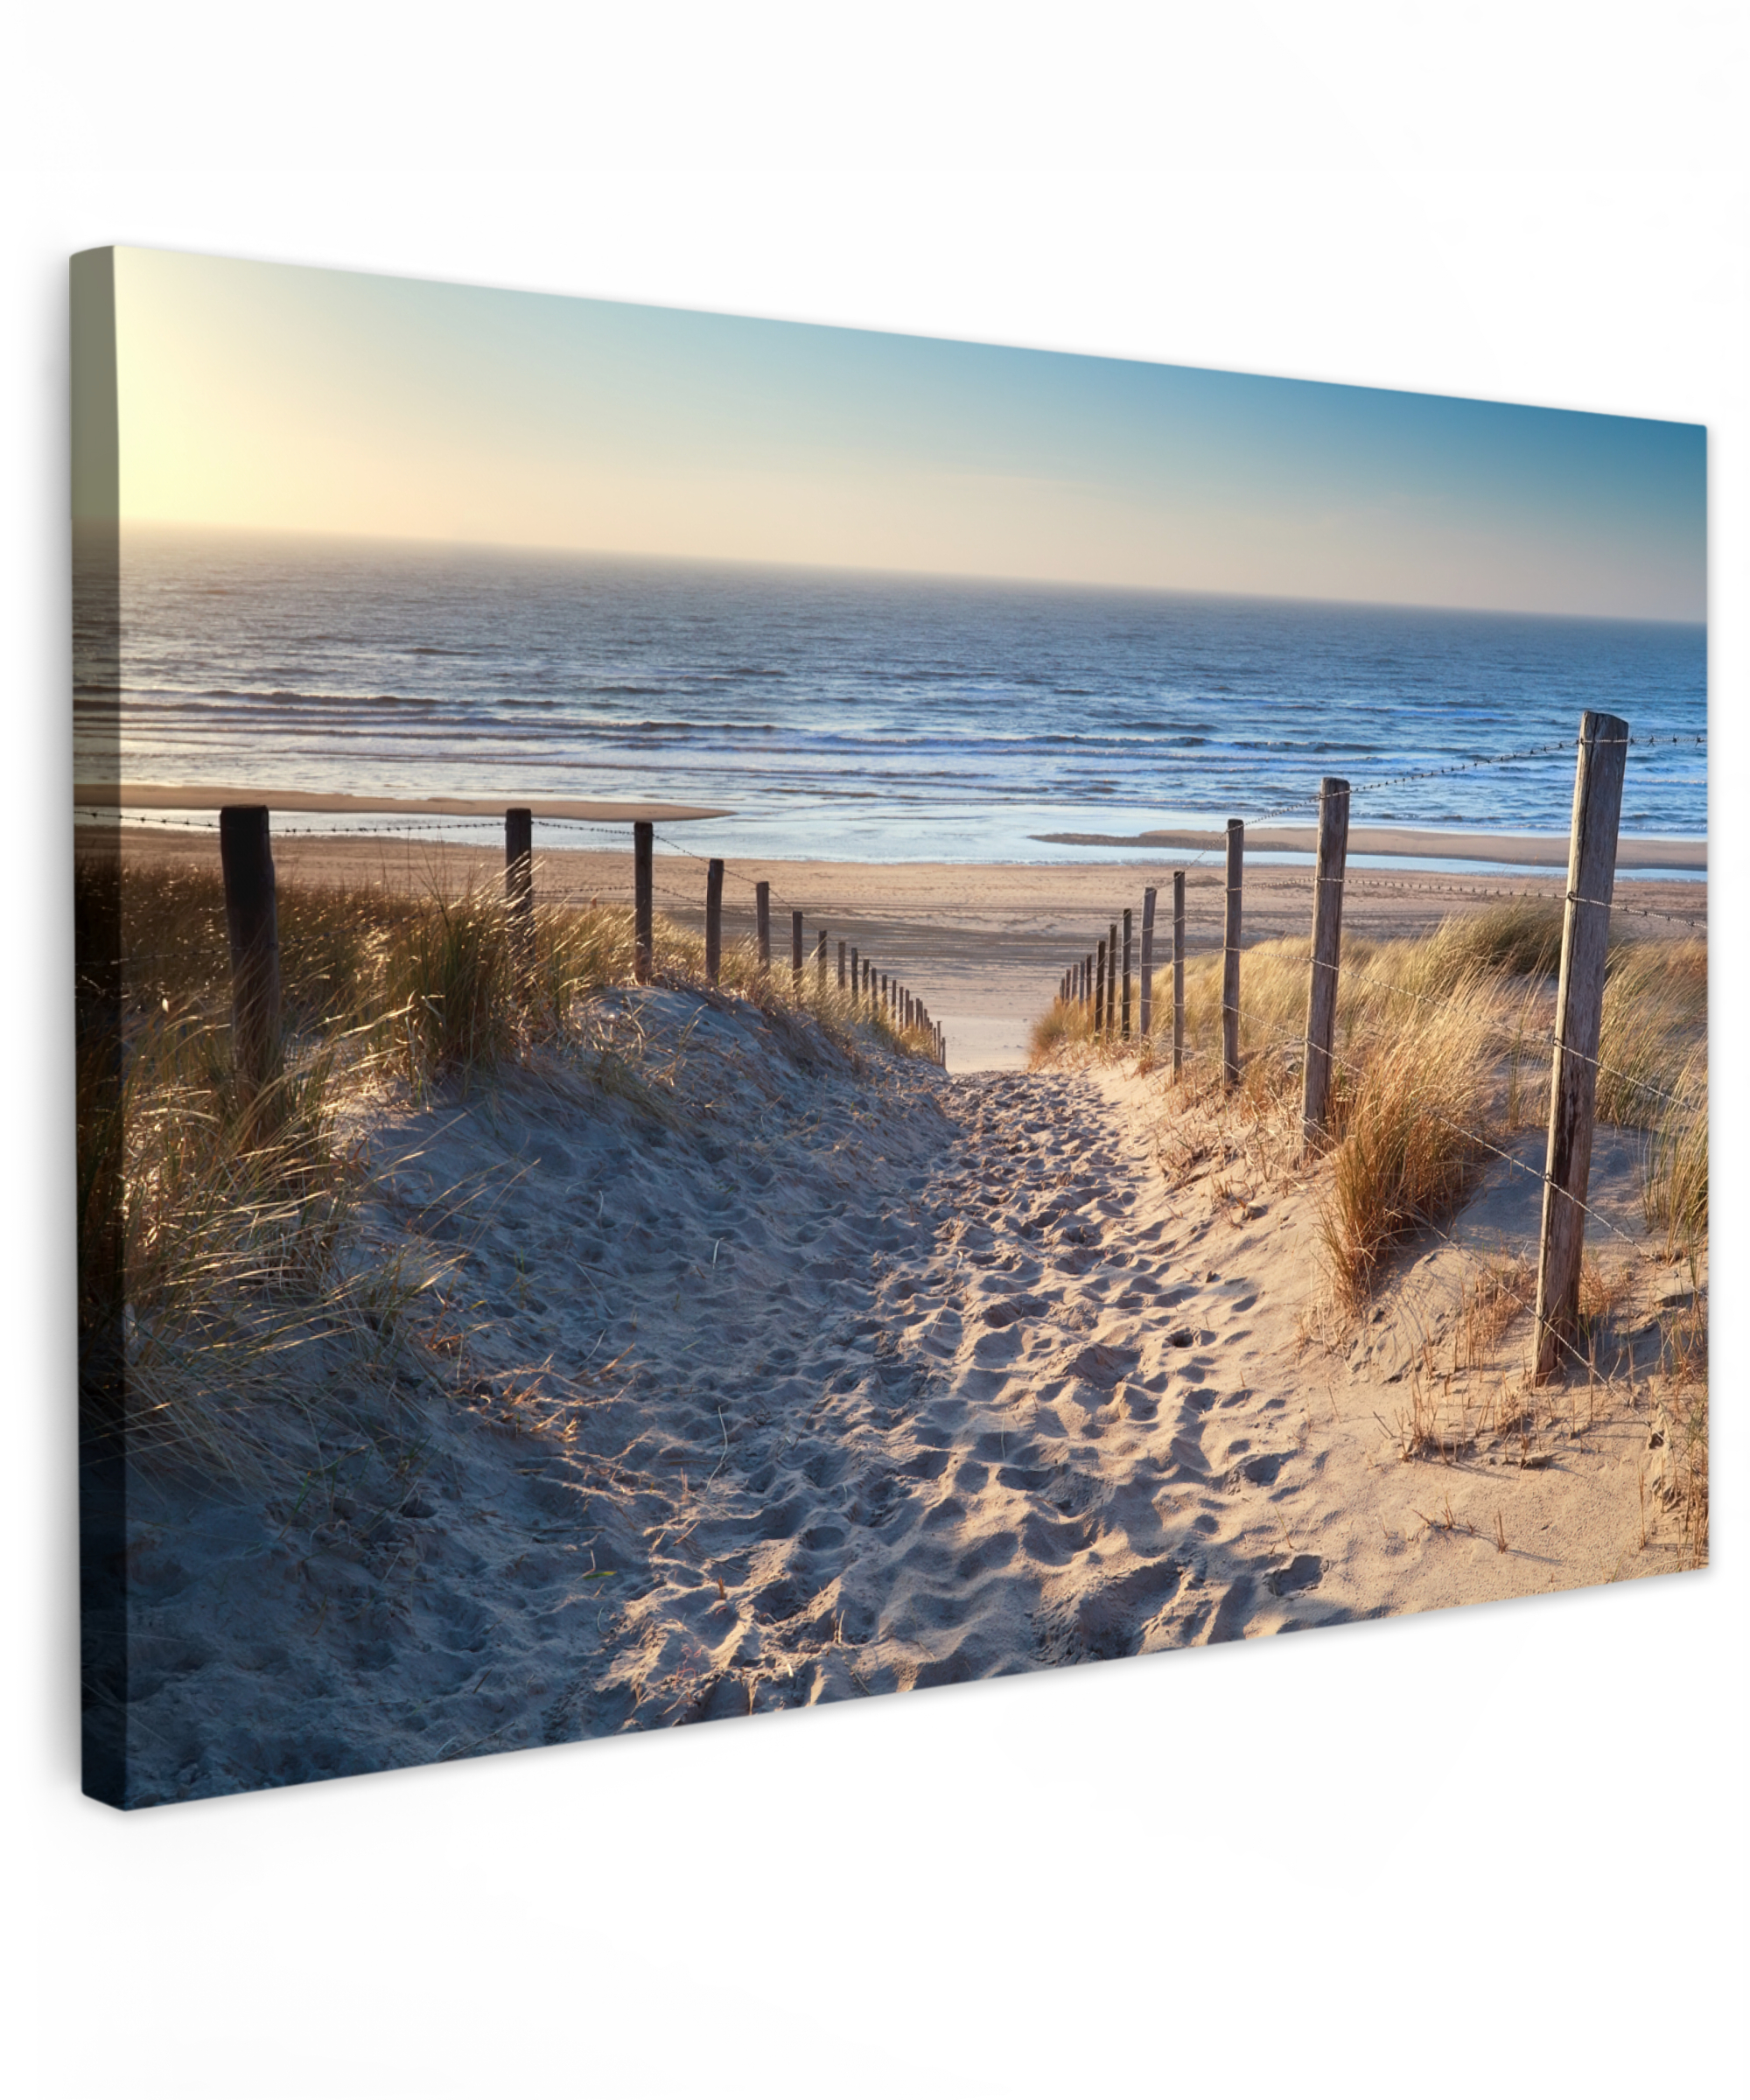 Canvas schilderij - Strand - Zee - Nederland